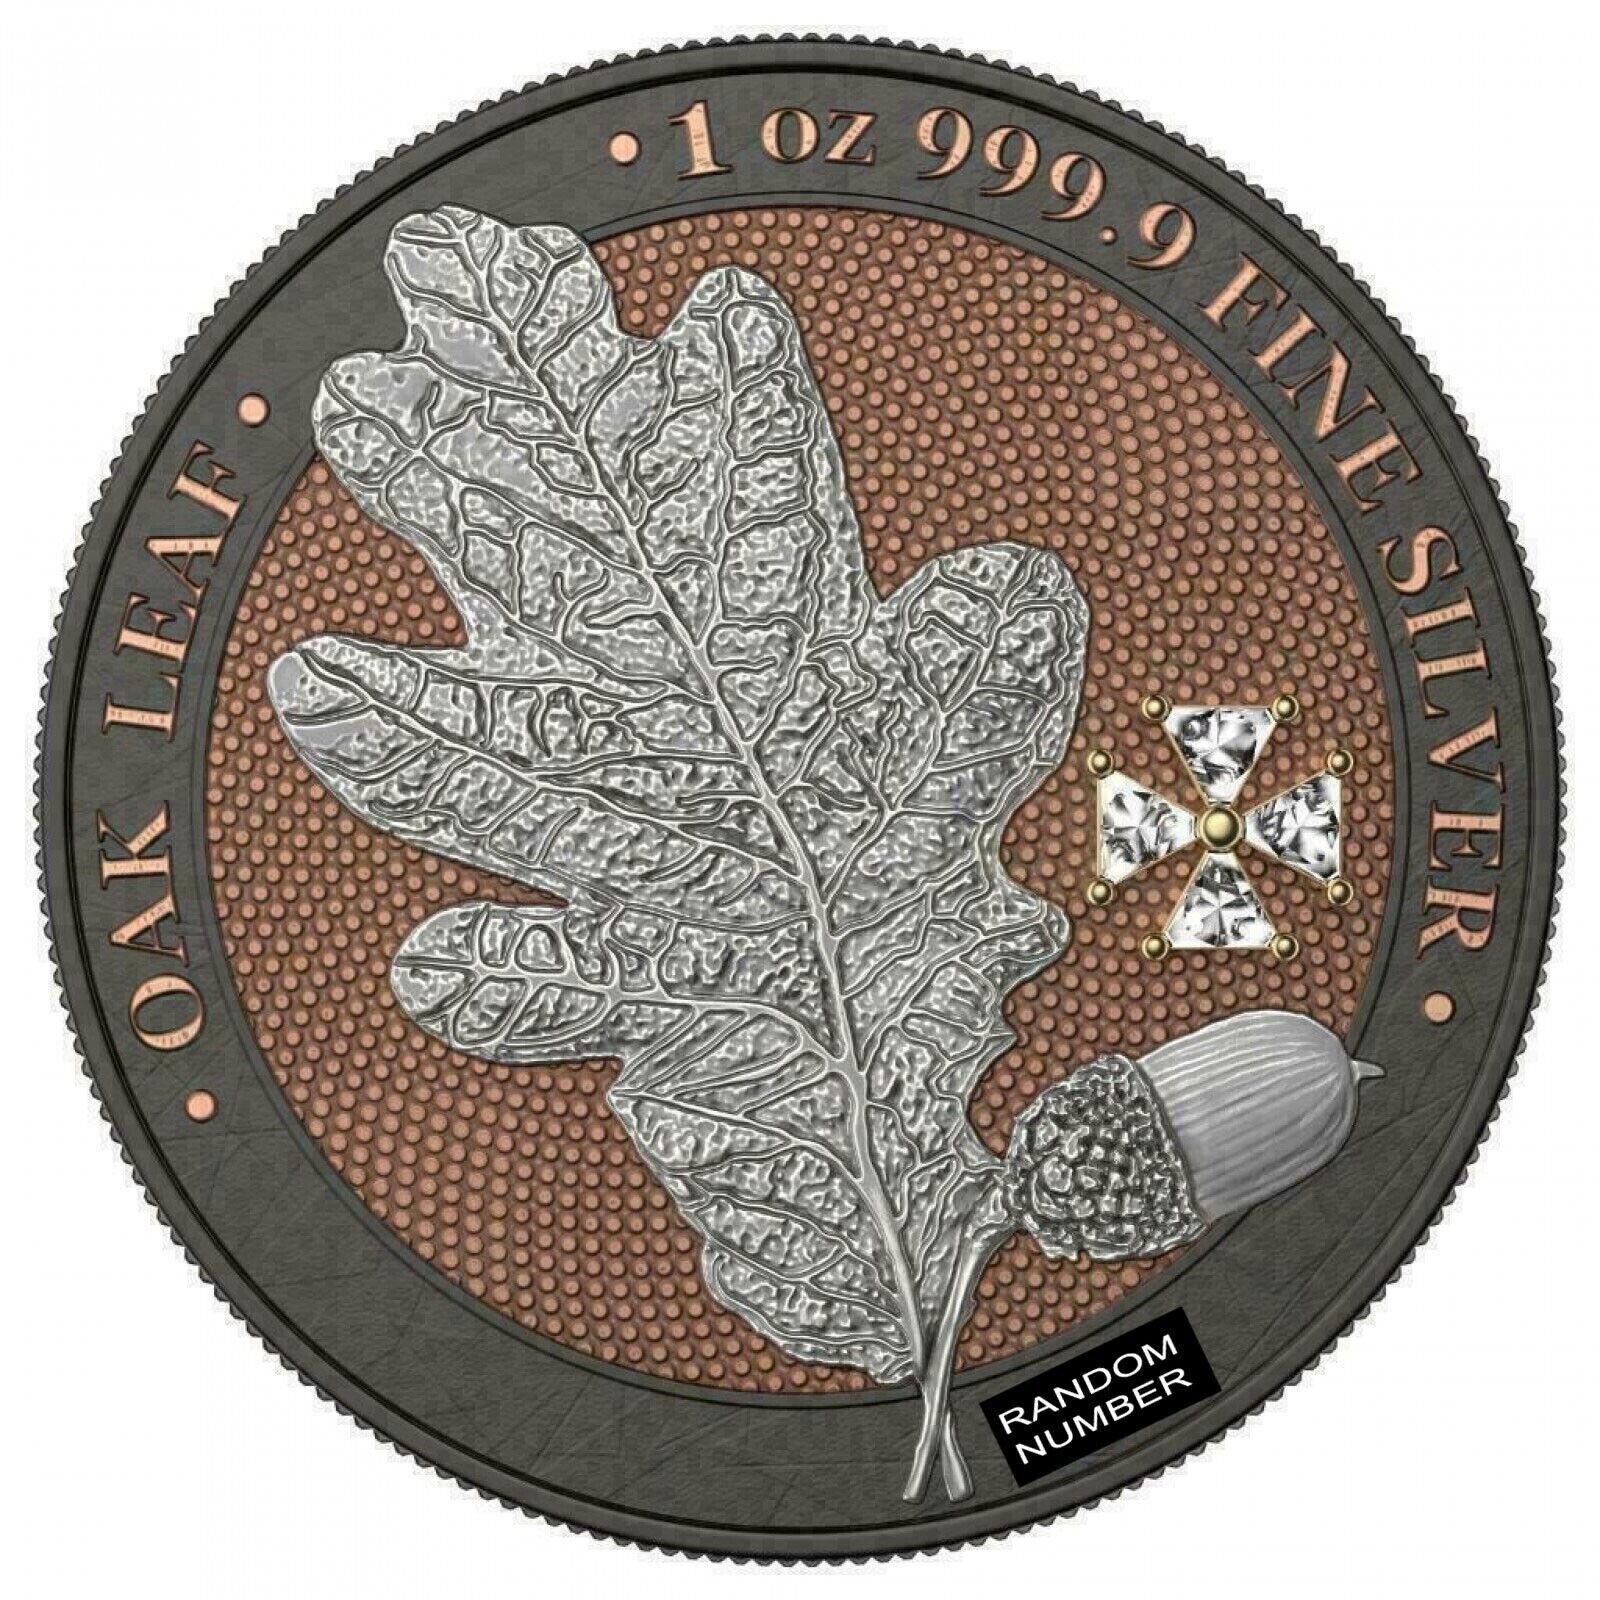 1 Oz Silver Coin 2019 5 Mark Germania Oak Leaf - Ruthenium White Crystal Cross